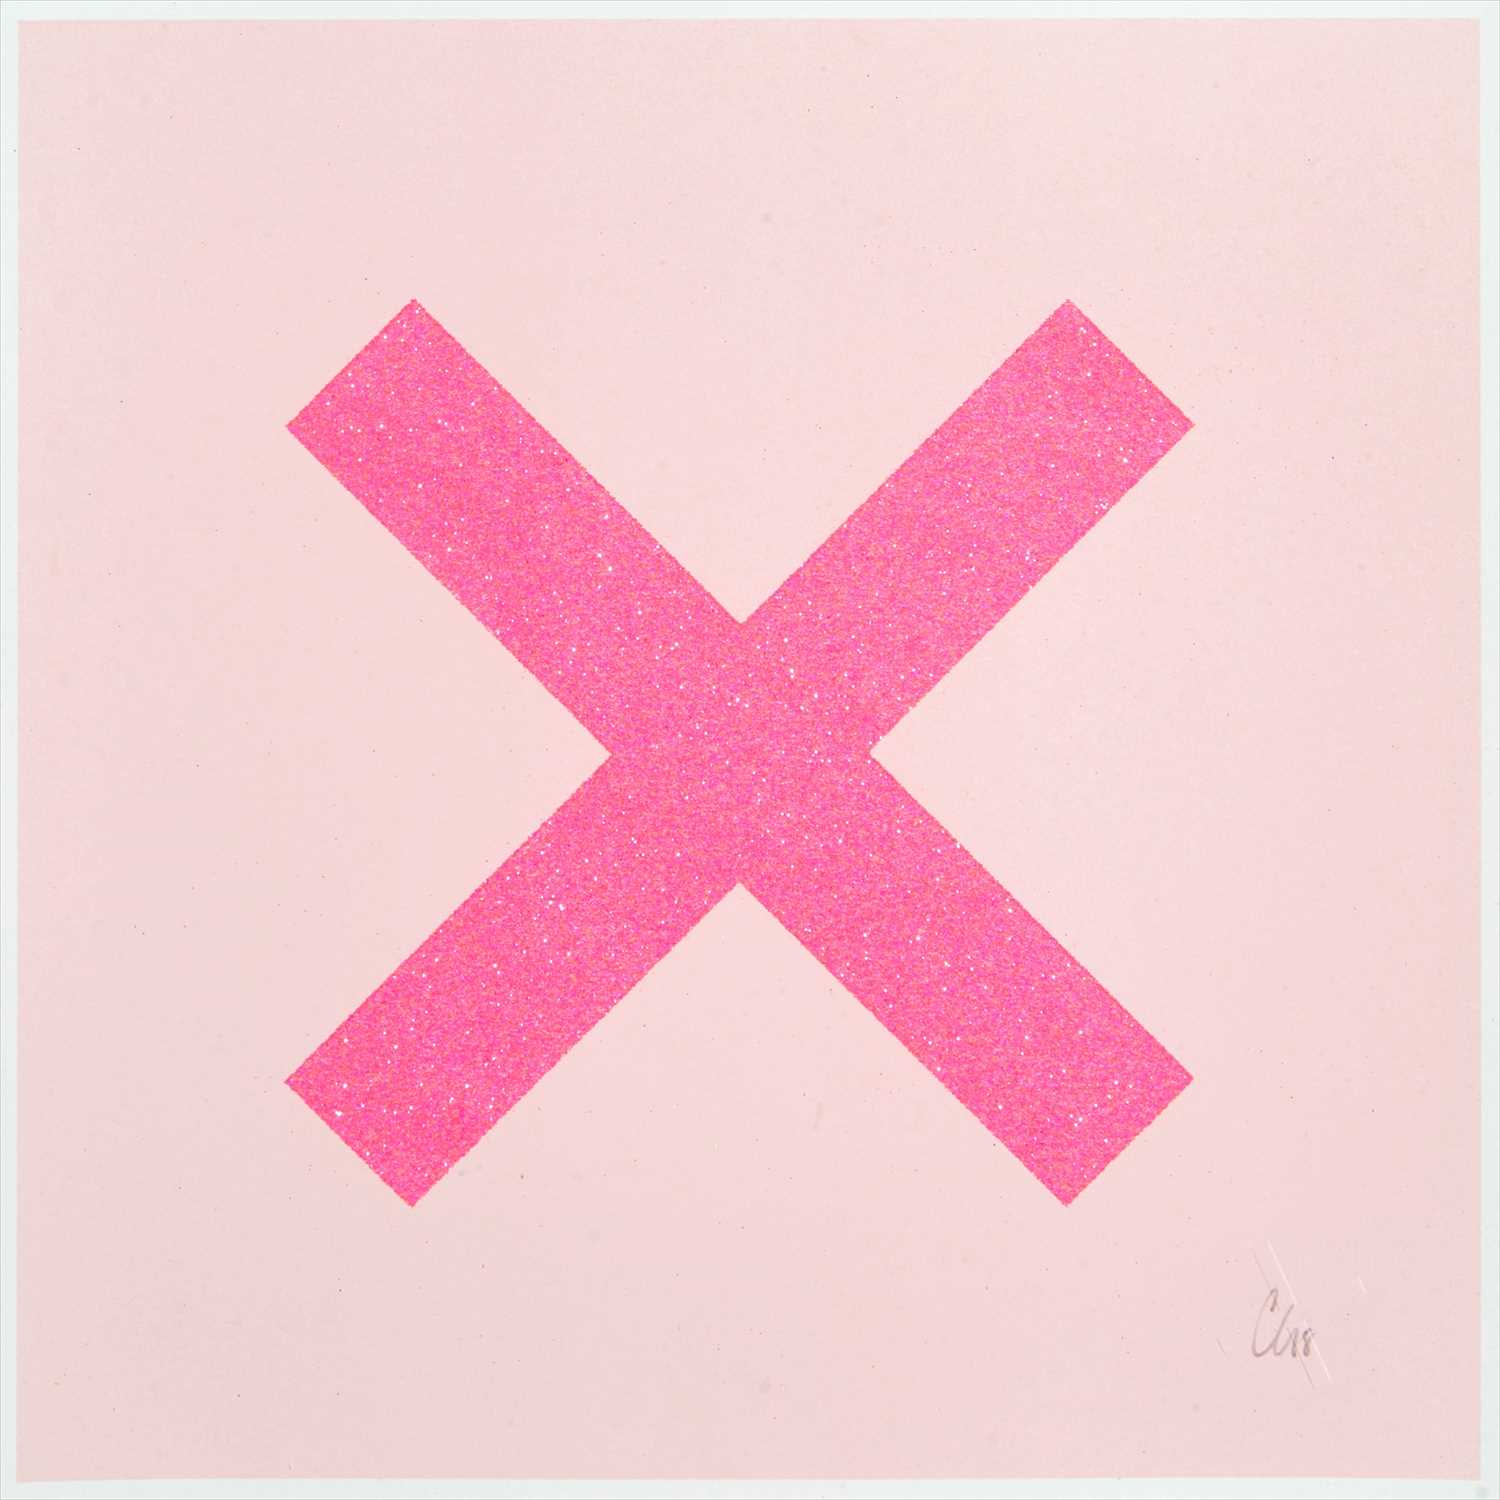 Lot 11 - Chris Levine (British 1960-), ‘Marks The Spot (Pink On Pink)’, 2018